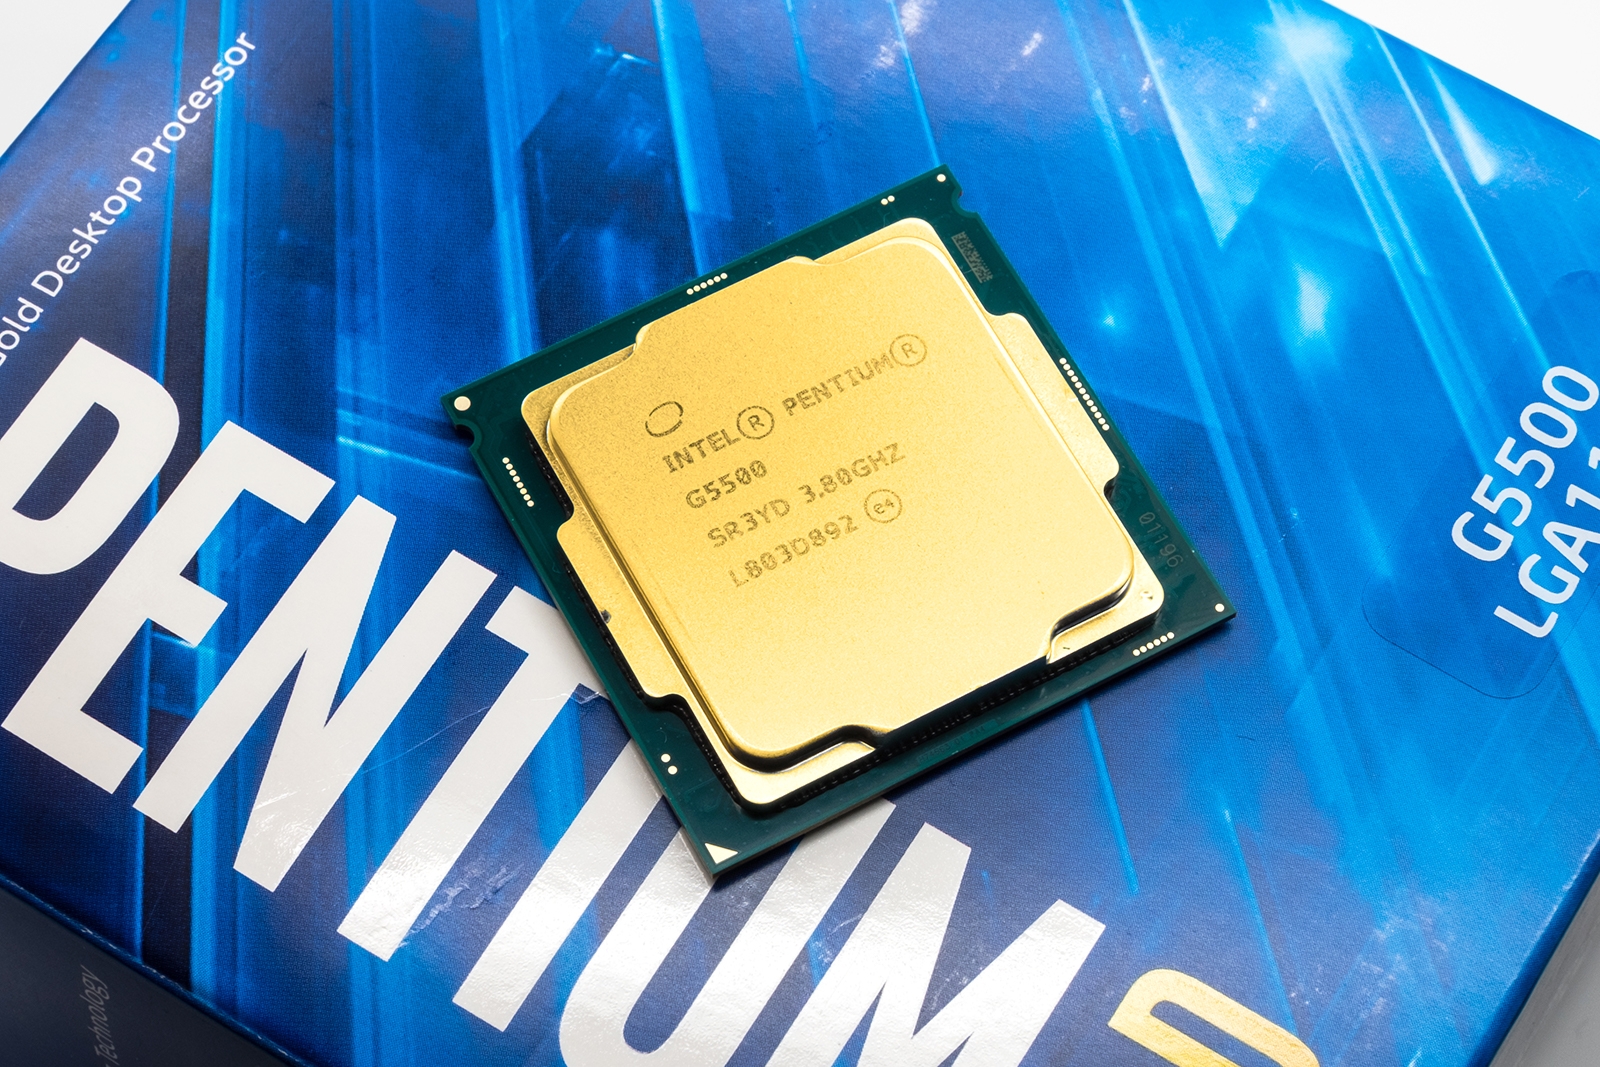 Intel core gold